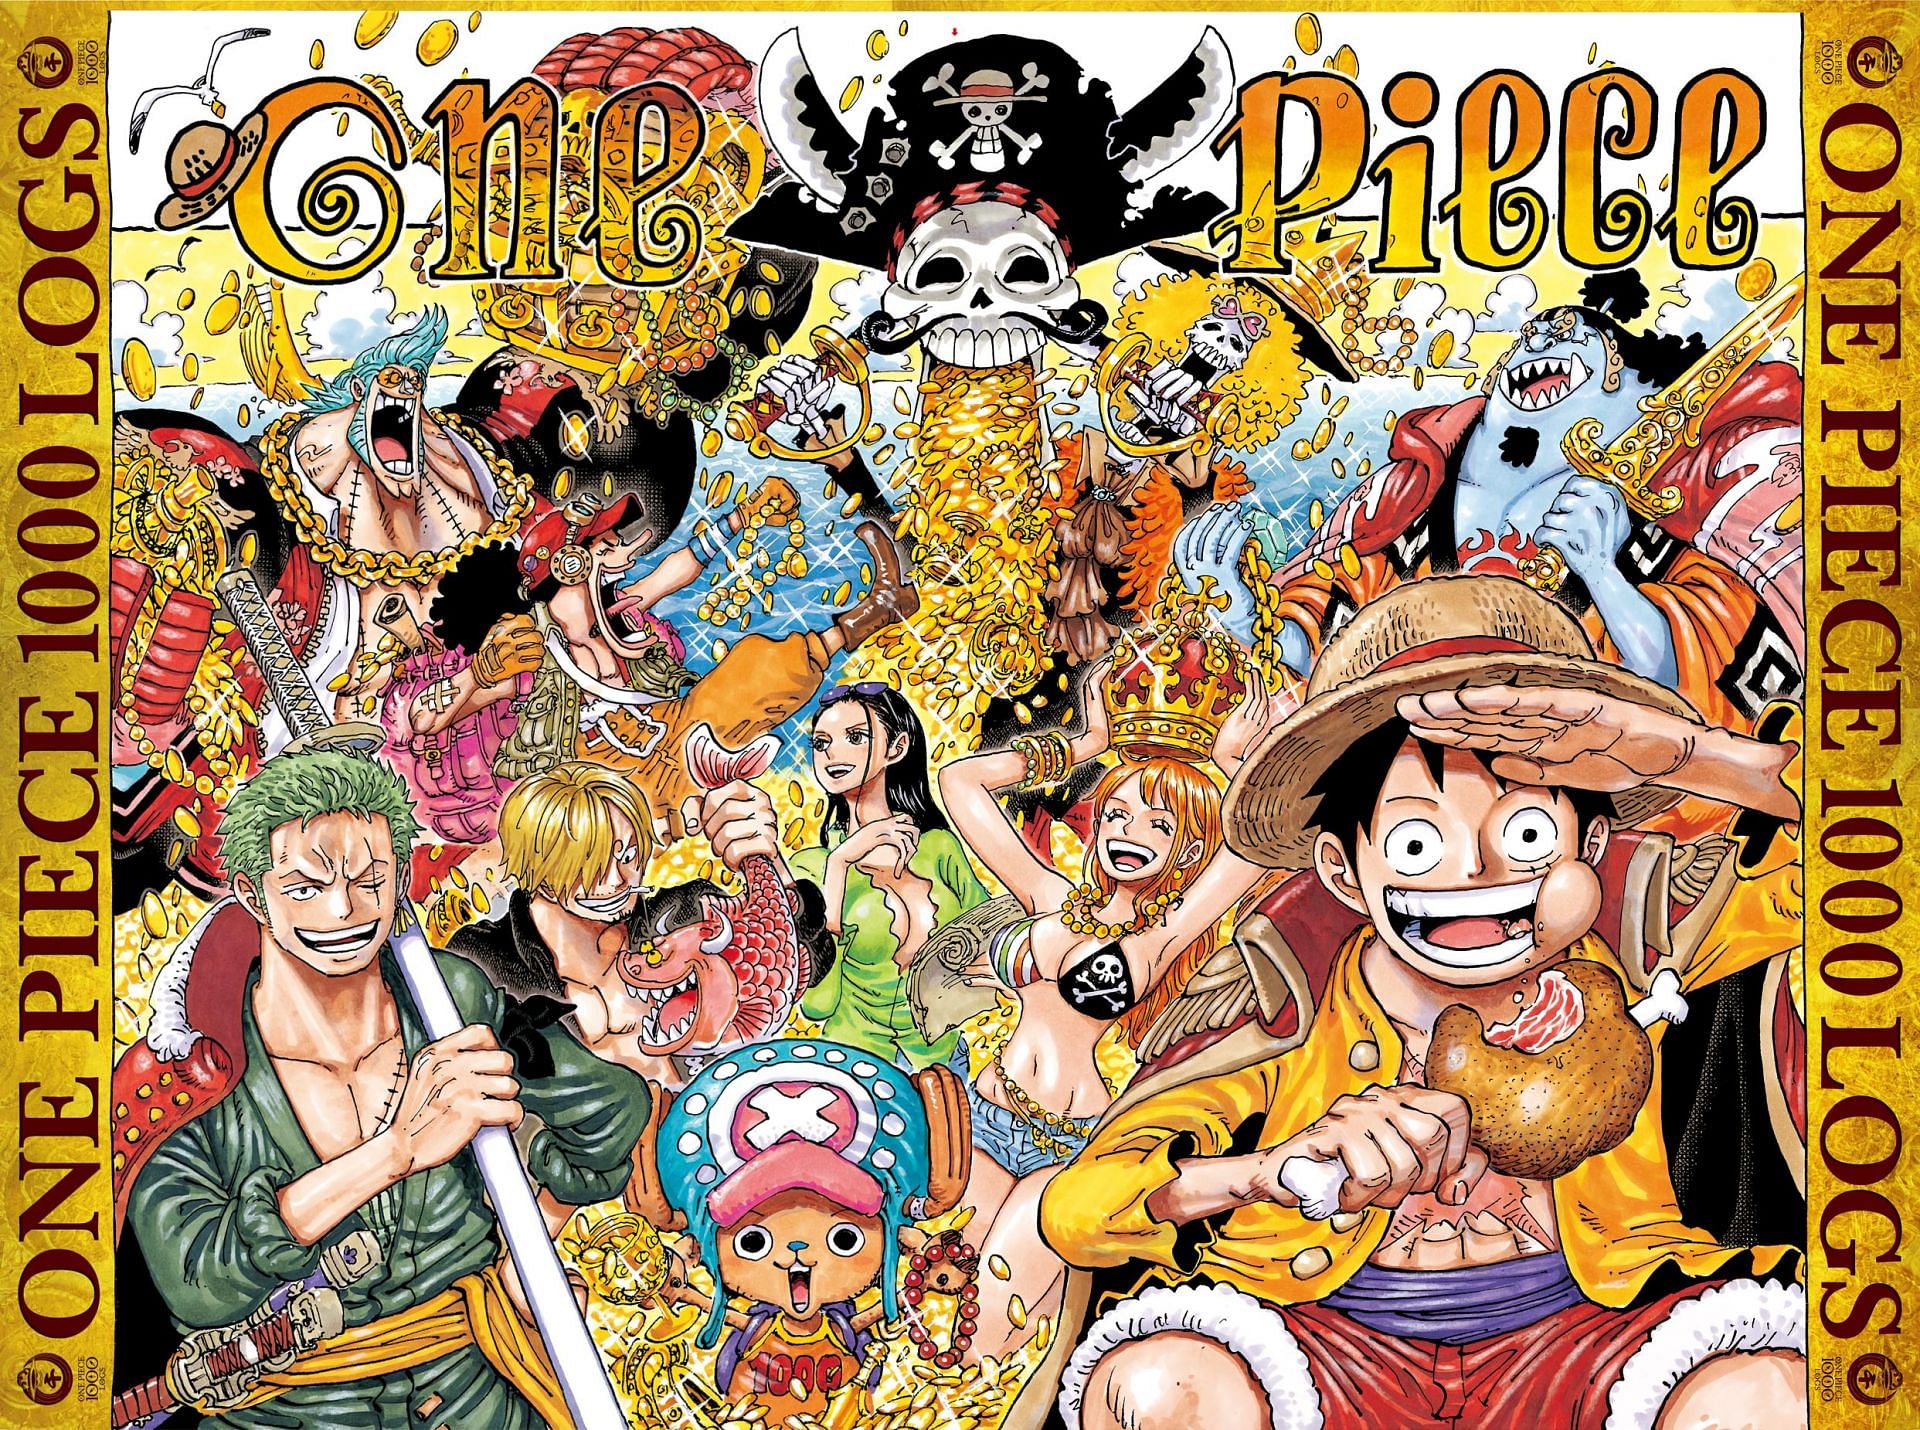 Cover art for One Piece manga chapter 1000 by Eiichiro Oda (Image via One Piece wiki)